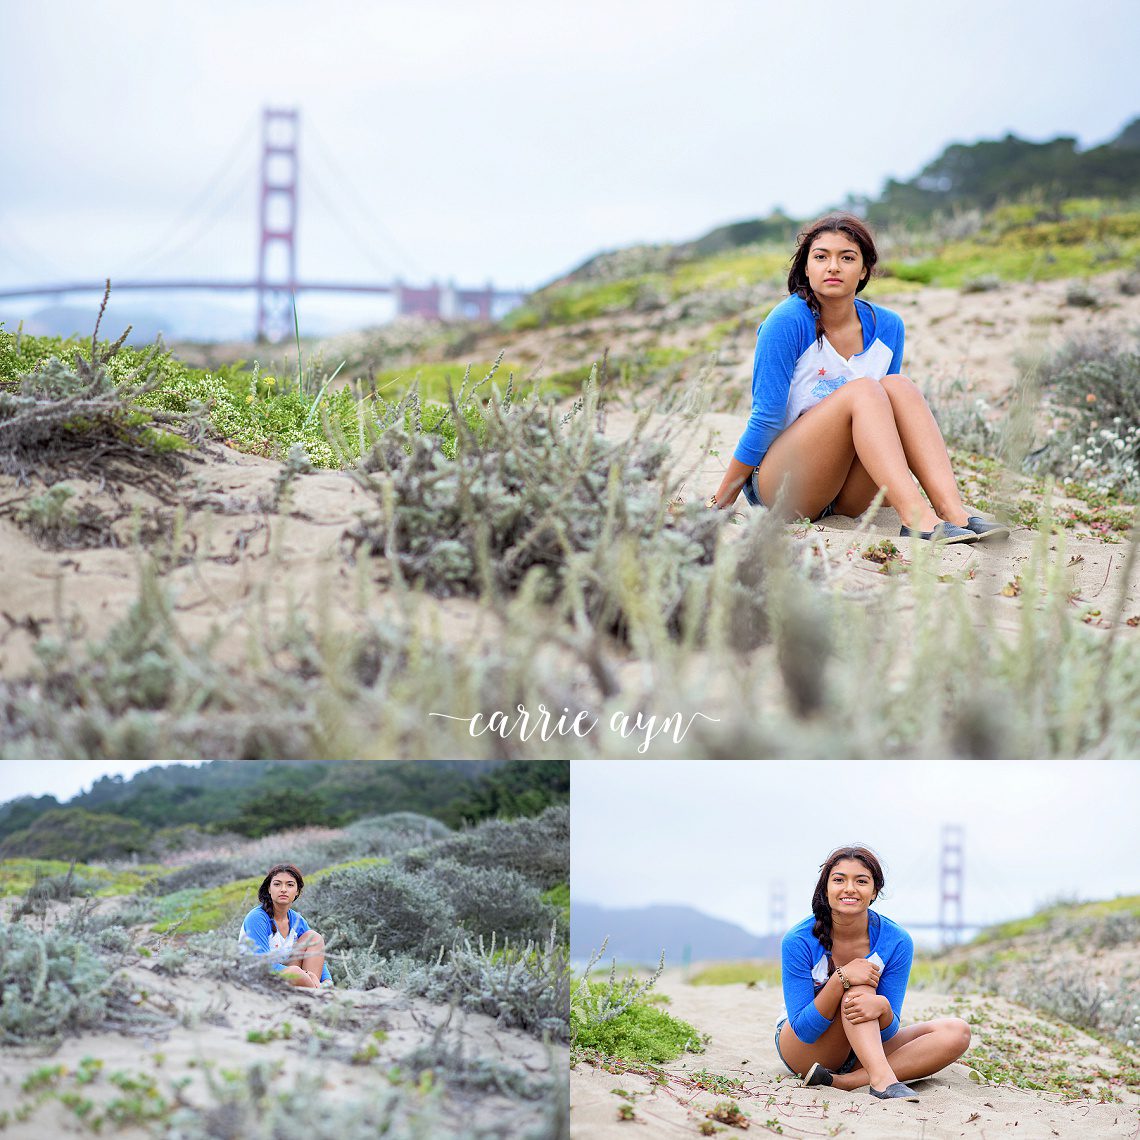 Carrie Ayn; San Francisco Senior Photographer; El Dorado Hills Senior Photographer; Cameron Park Senior Photographer